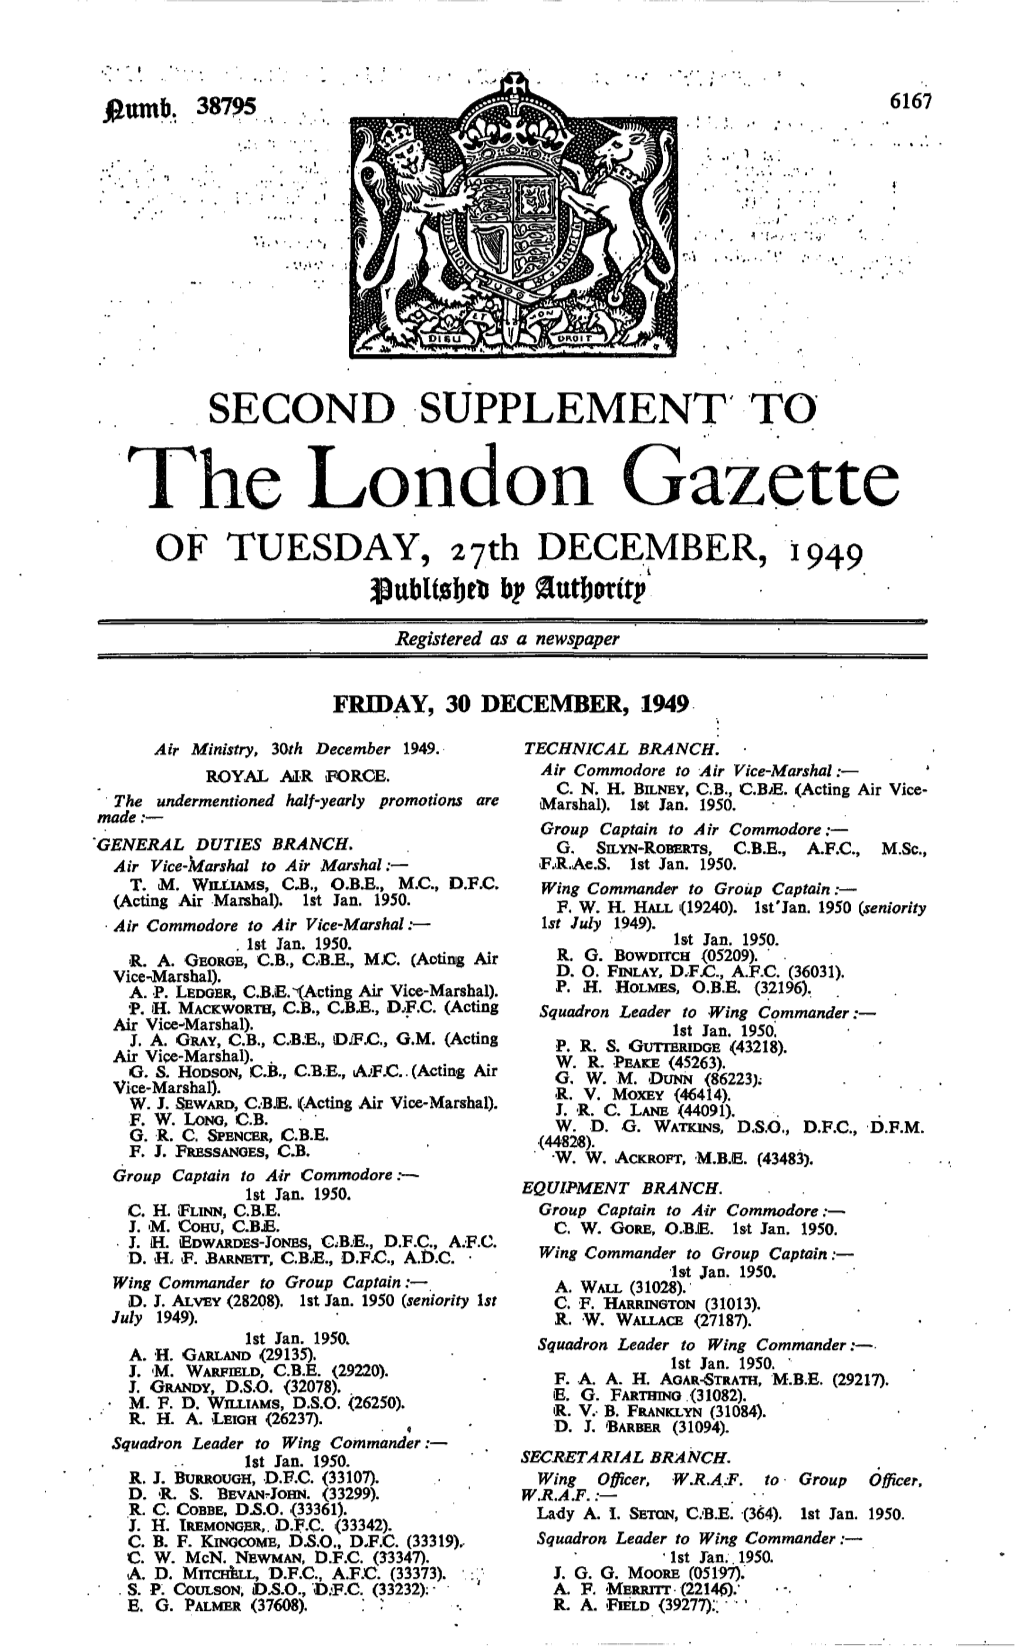 The London Gazette of TUESDAY, 27Th DECEMBER, 1949 Ftablfgftefc B? Fltttftorttp